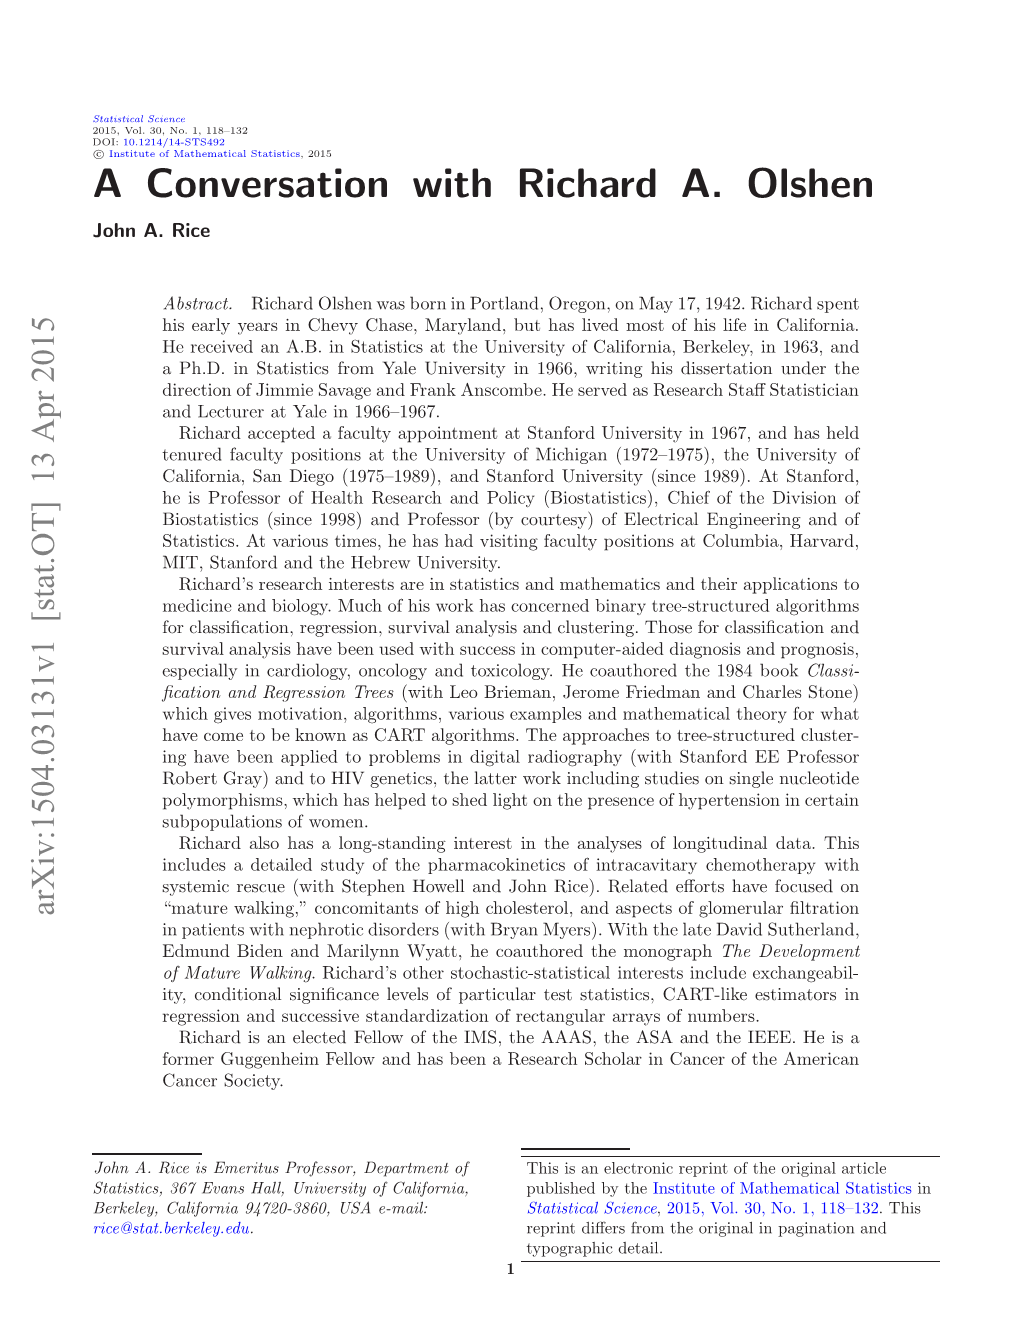 A Conversation with Richard A. Olshen 3